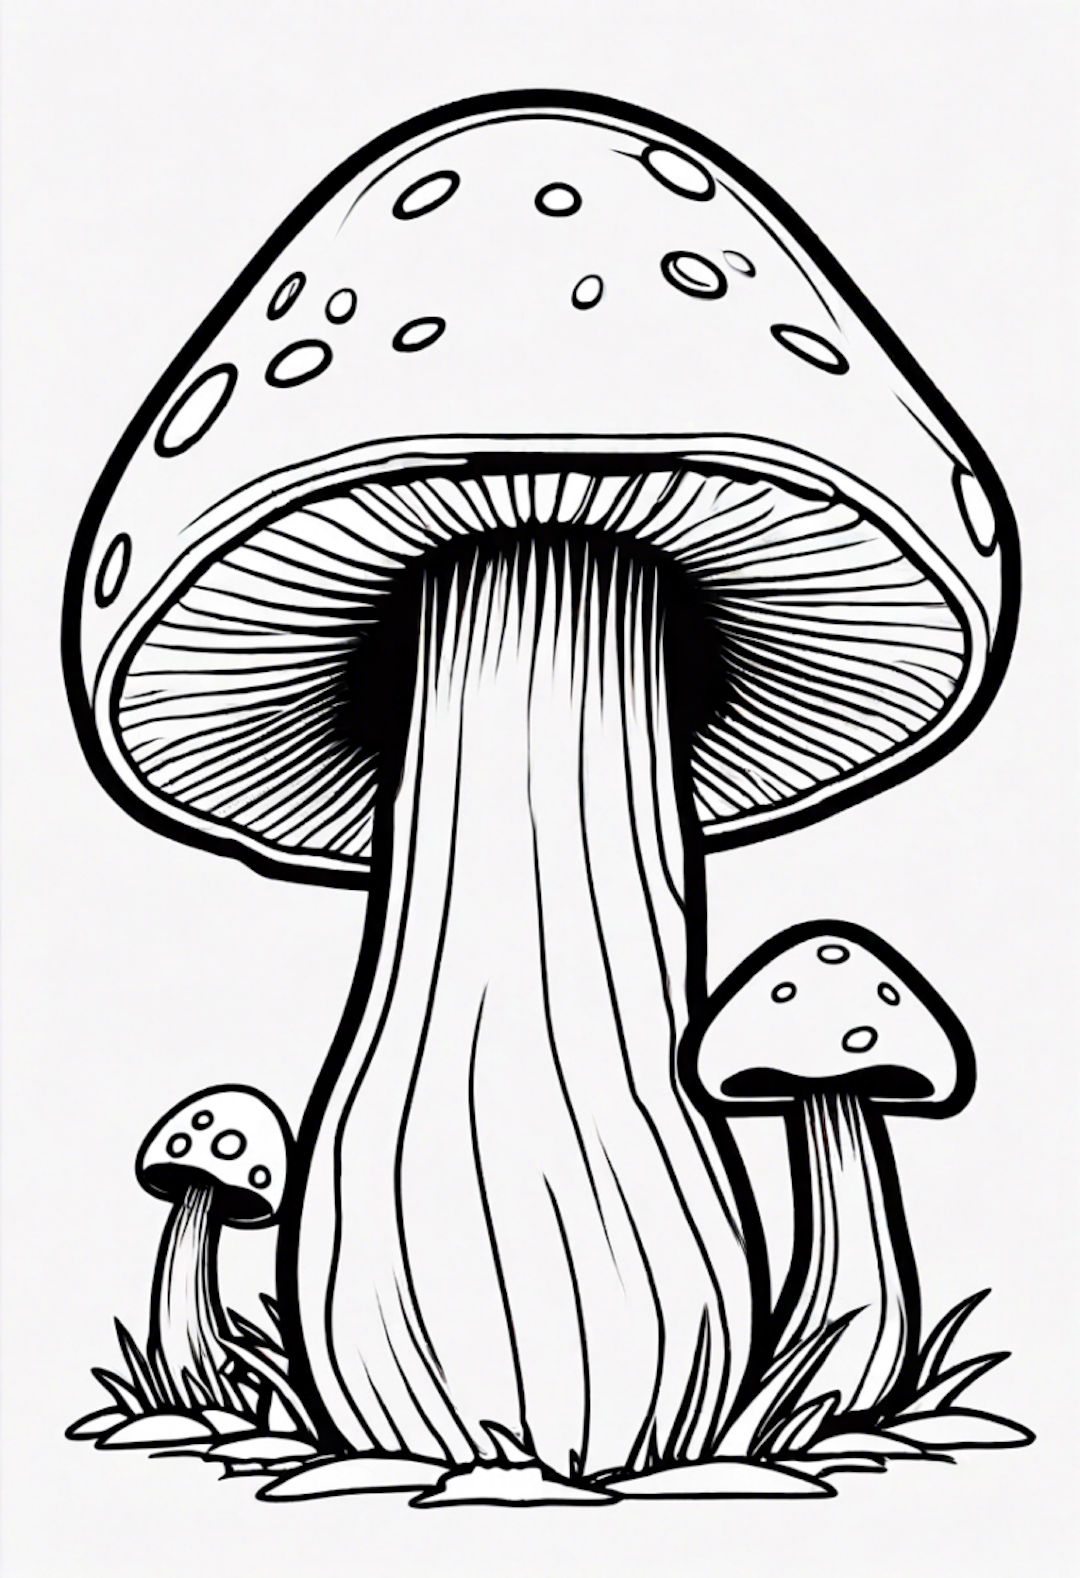 Mushroom Superheroes coloring pages